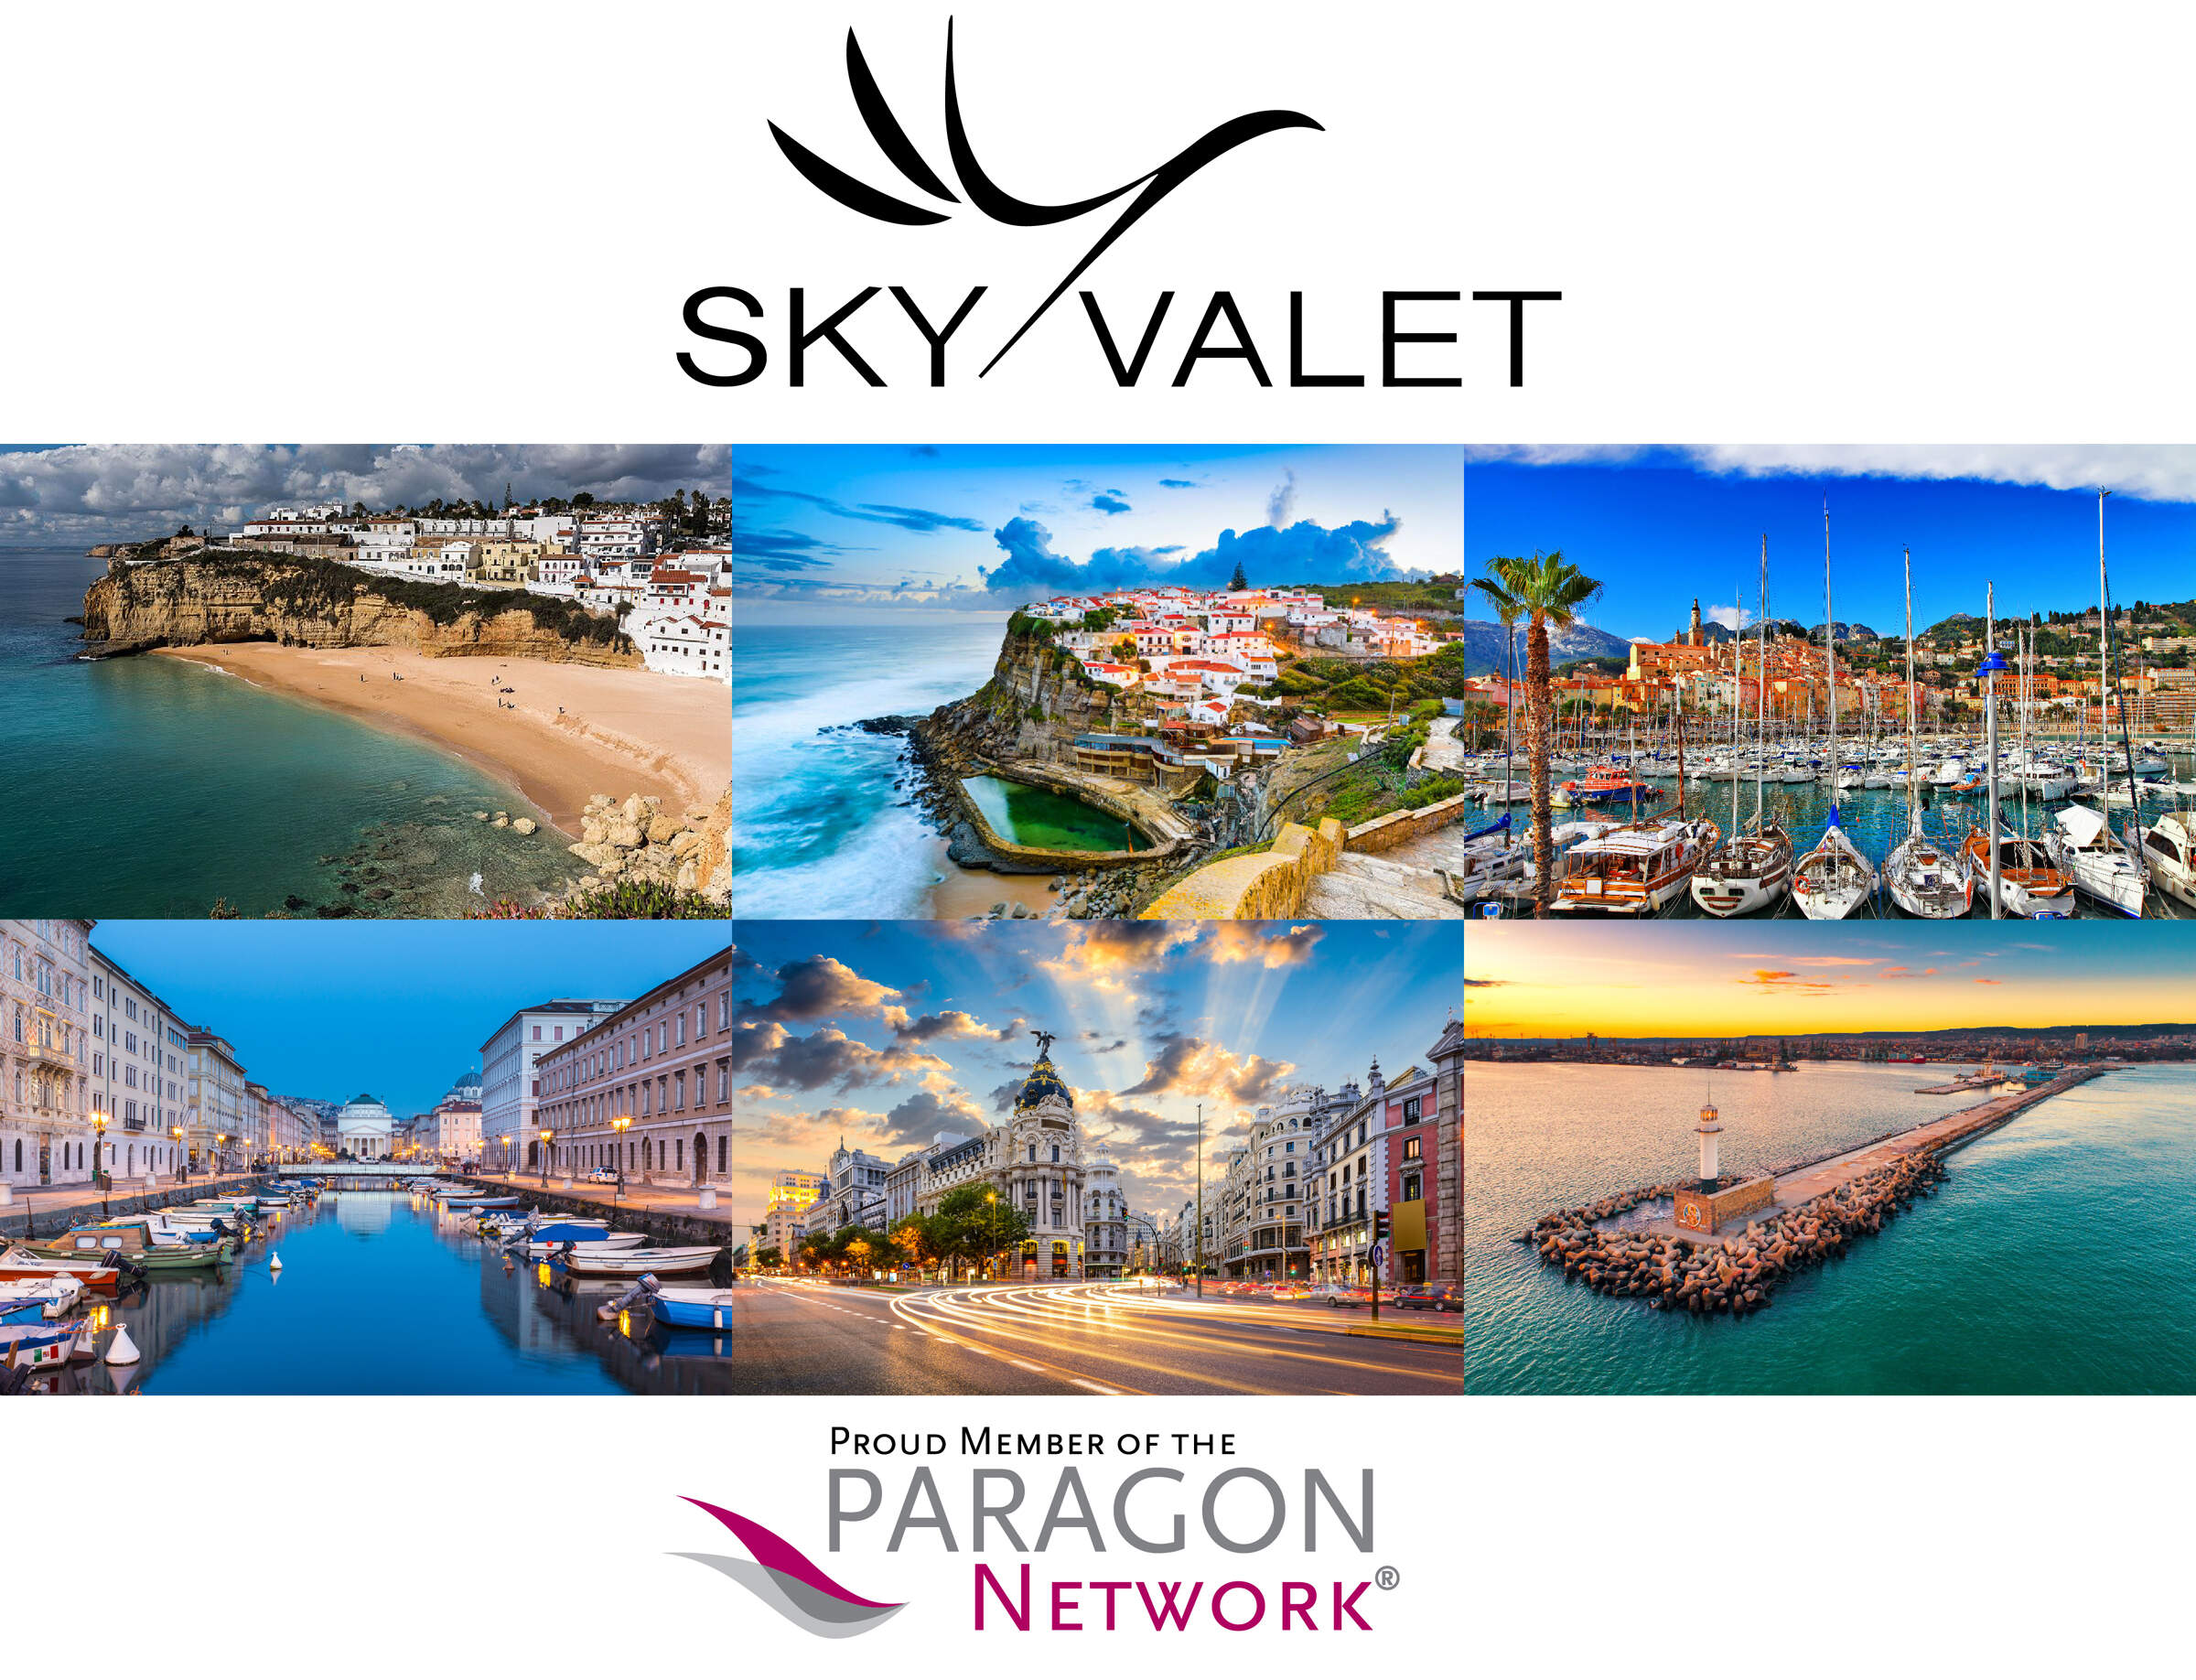 European FBO Giant Sky Valet Joins The Paragon Network